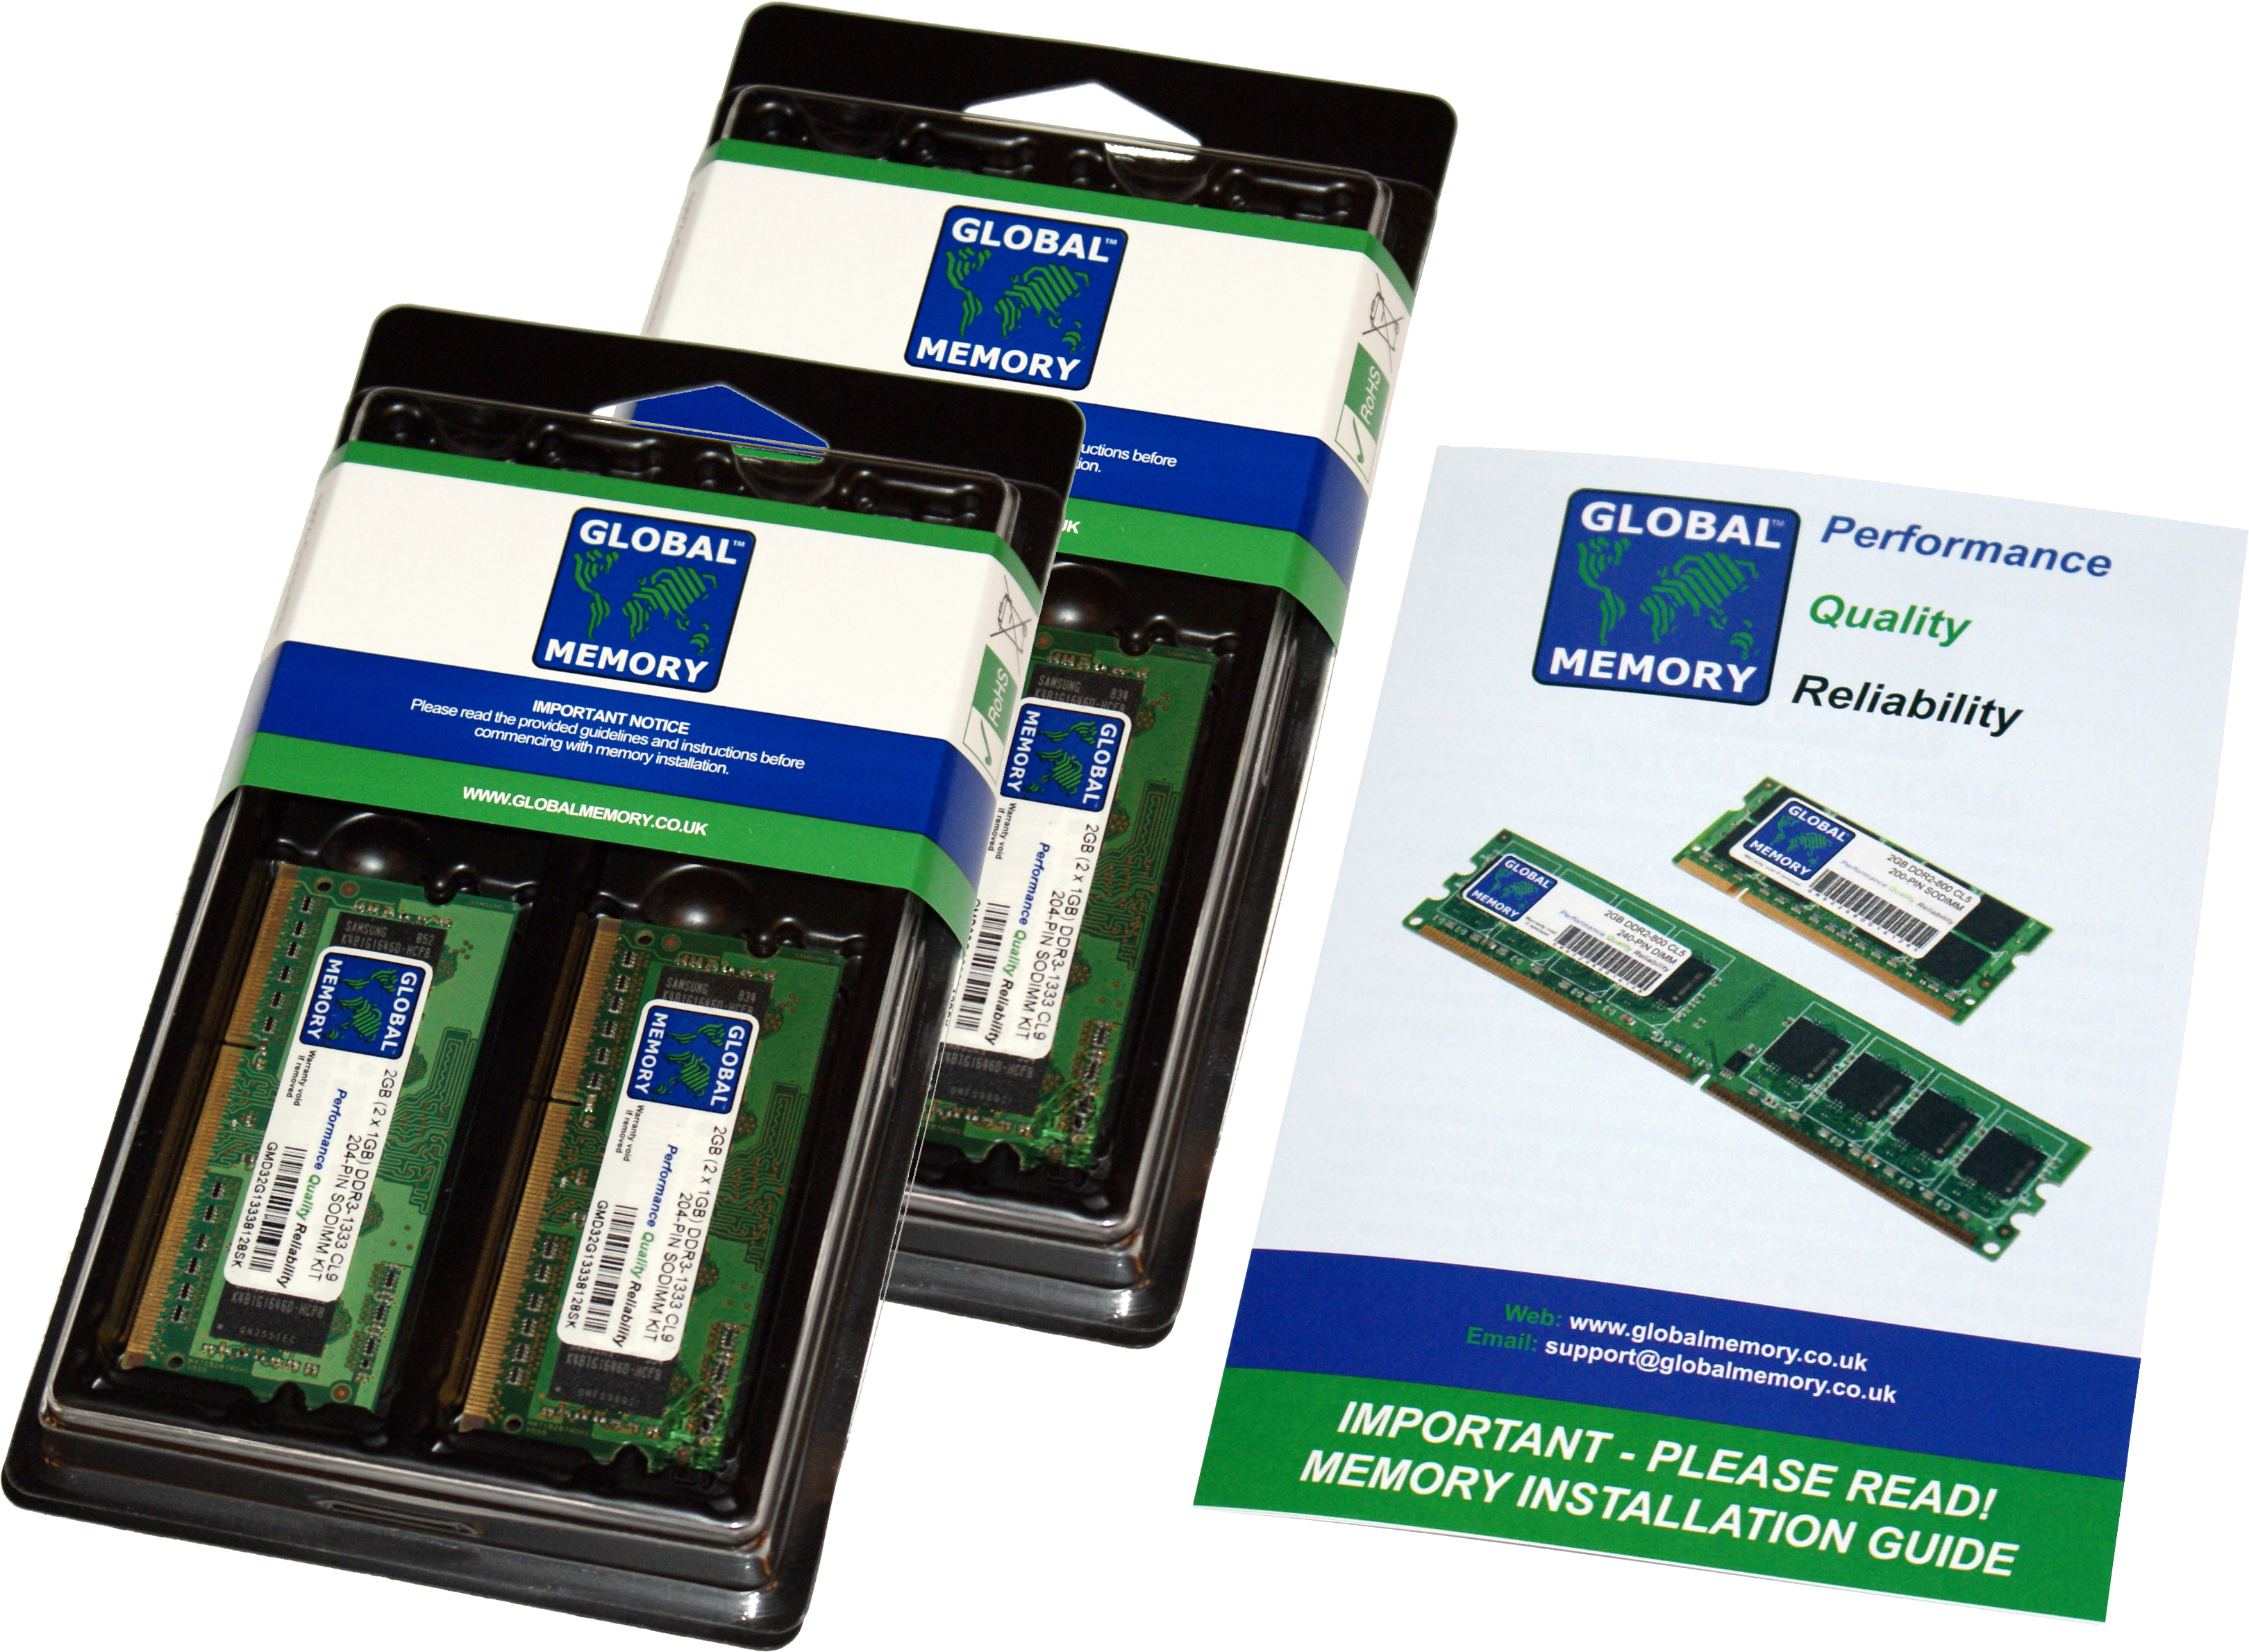 32GB (4 x 8GB) DDR4 2666MHz PC4-21300 260-PIN SODIMM MEMORY RAM KIT FOR LENOVO LAPTOPS/NOTEBOOKS